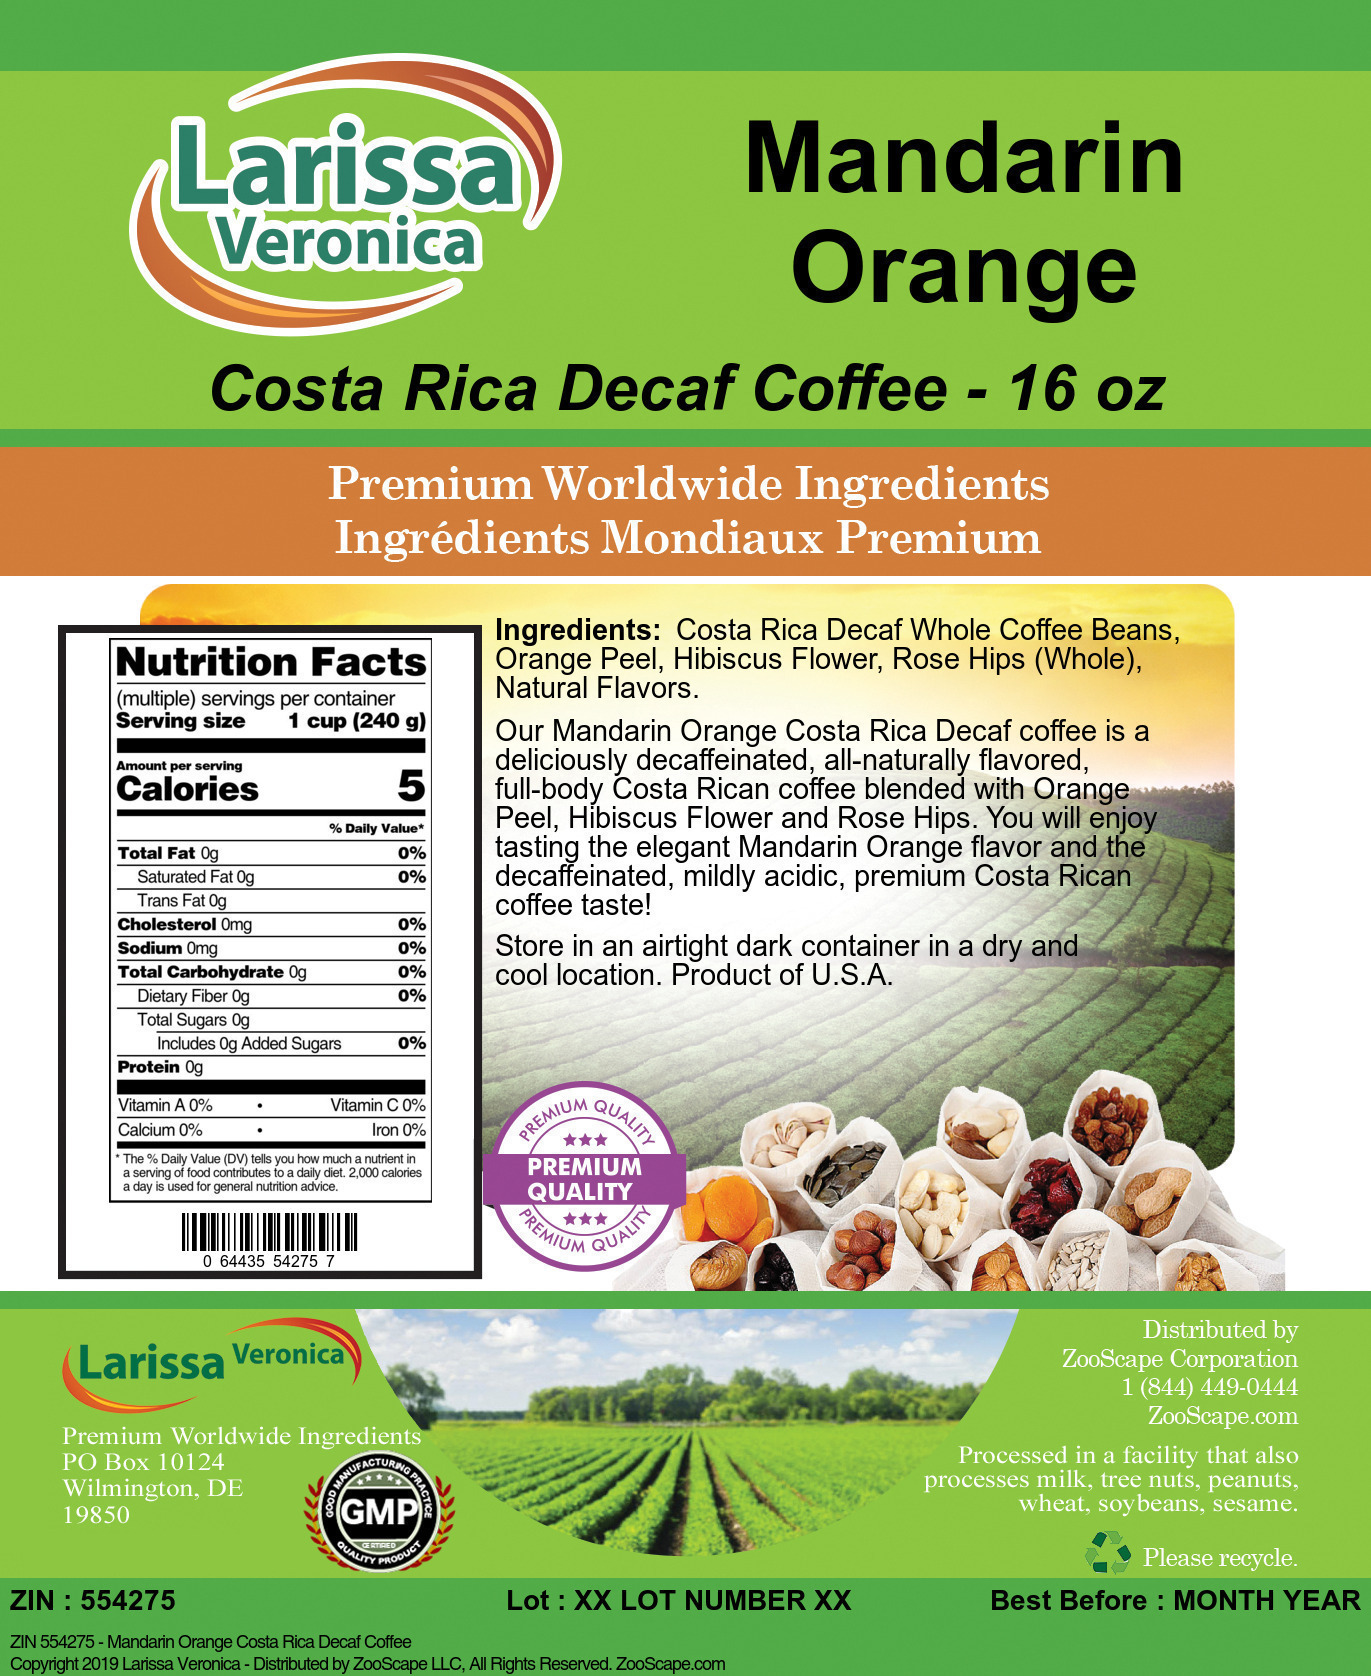 Mandarin Orange Costa Rica Decaf Coffee - Label